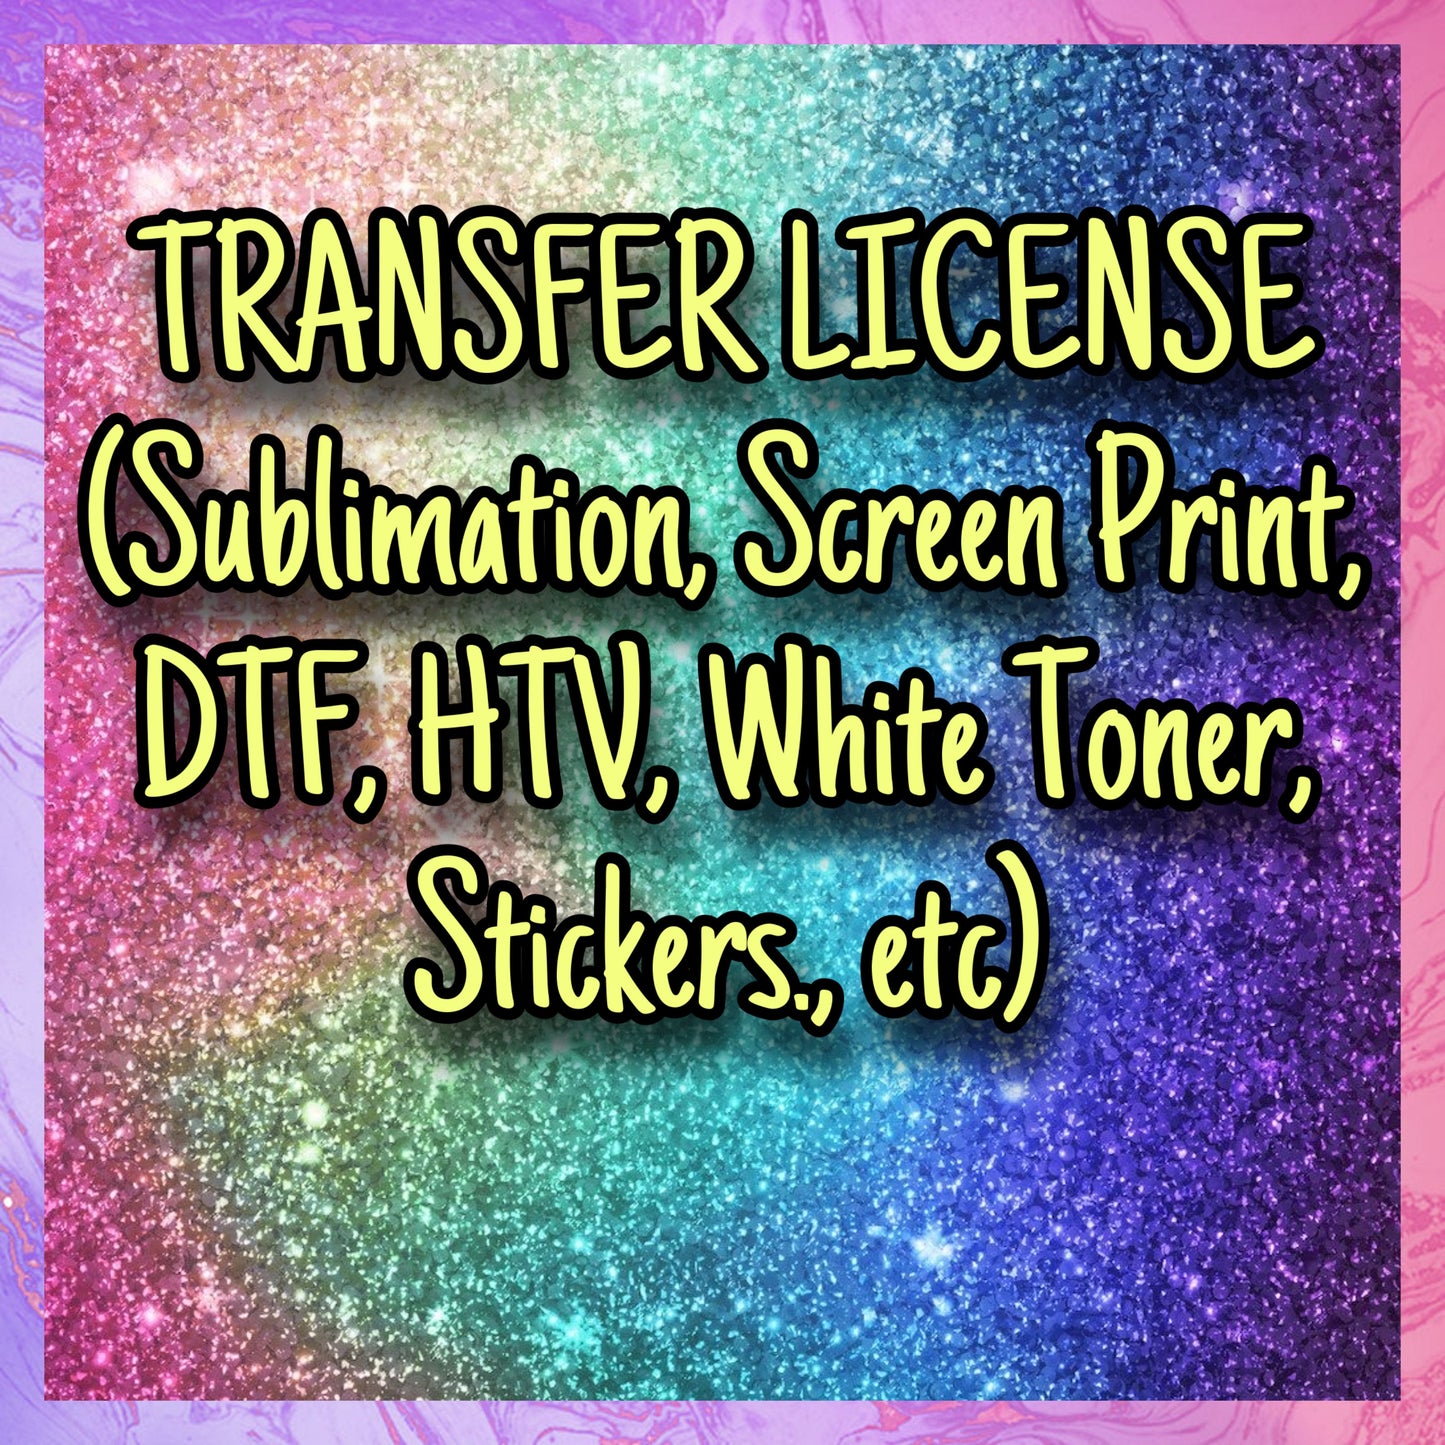 Single Design Transfer License